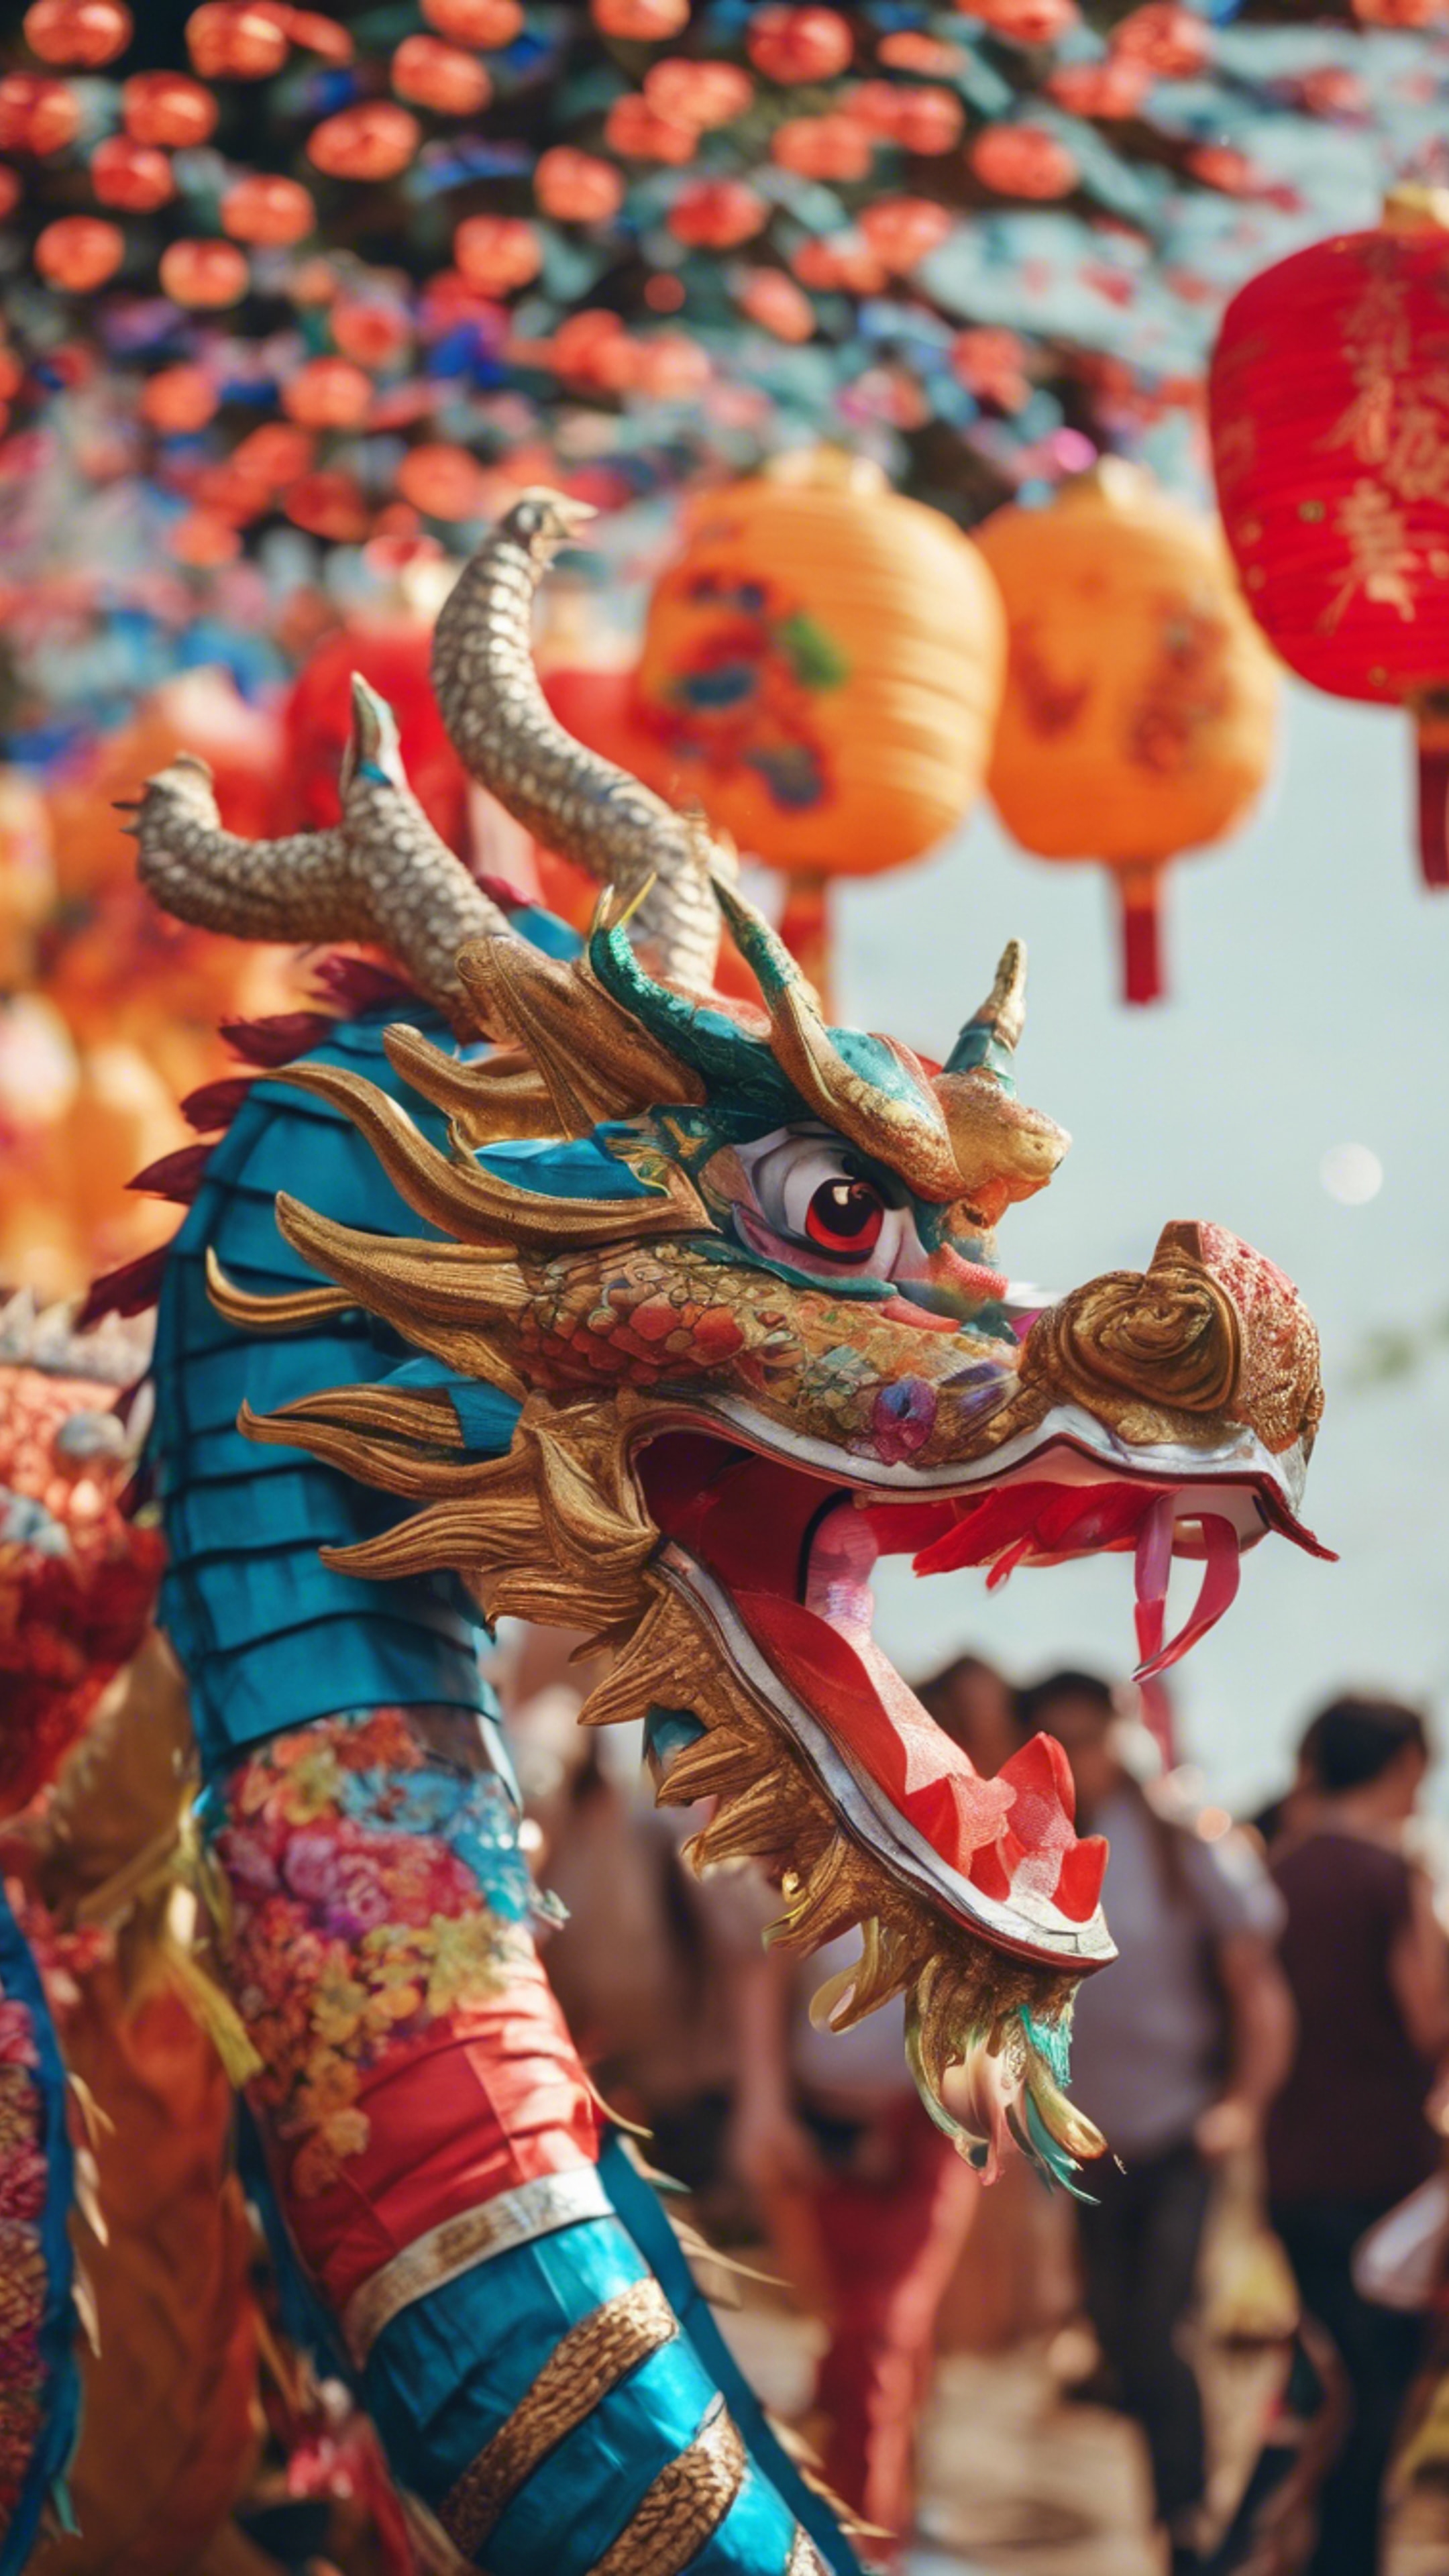 An oriental-style dragon parading amidst a colorful festival with paper lanterns. Wallpaper[5877da5b29174274b3e8]